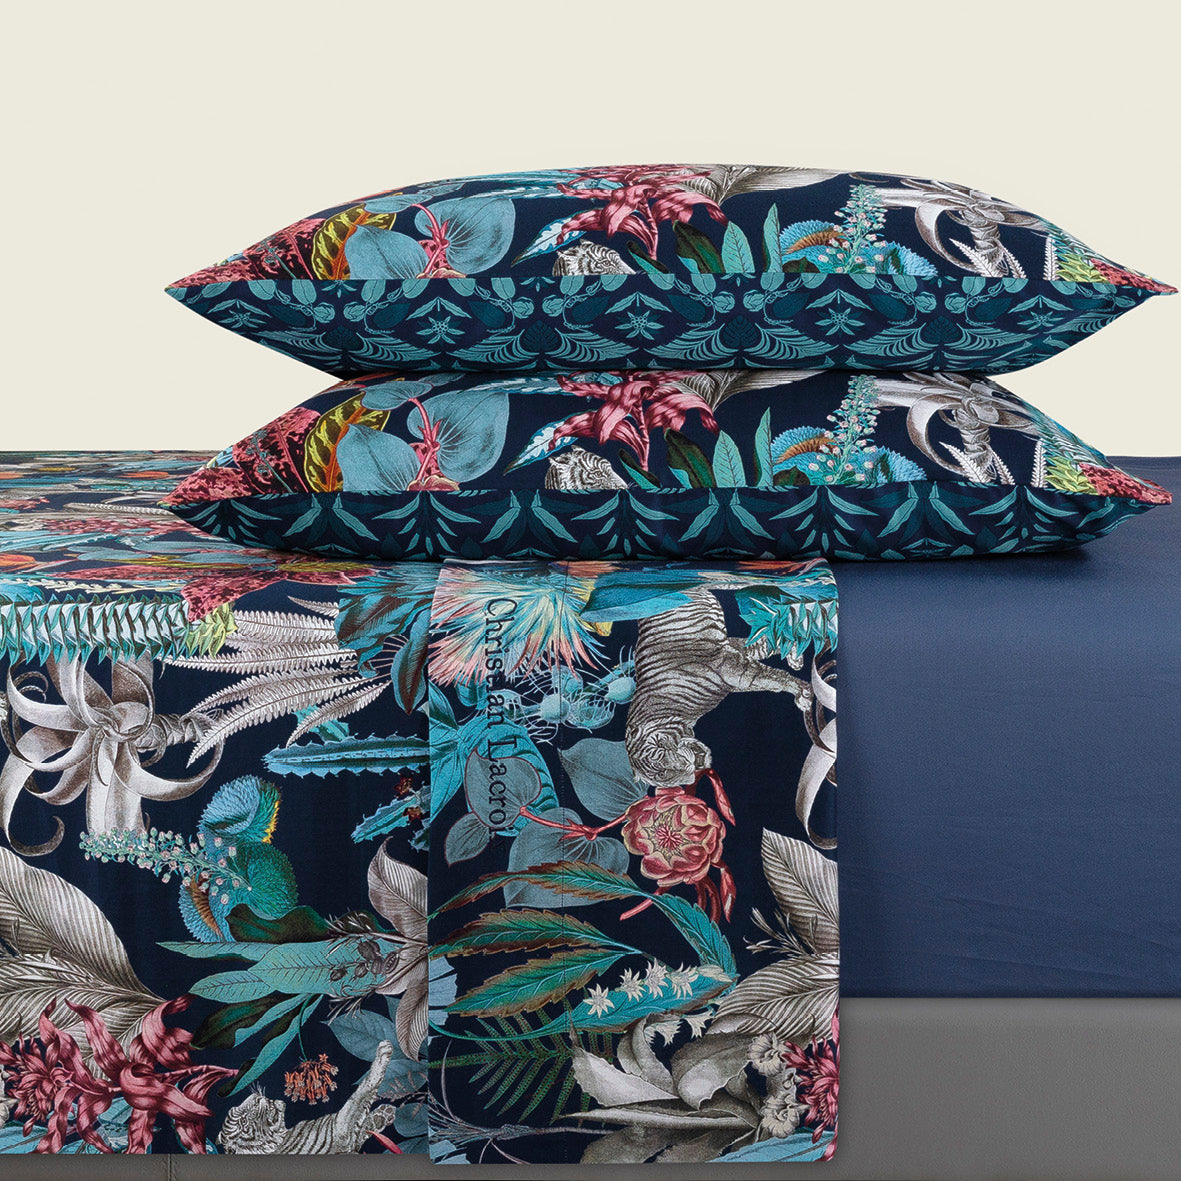 Set of sheets : fitted sheet, flat sheet, pillowcase(s) in cotton satin - Zanzibar Blue